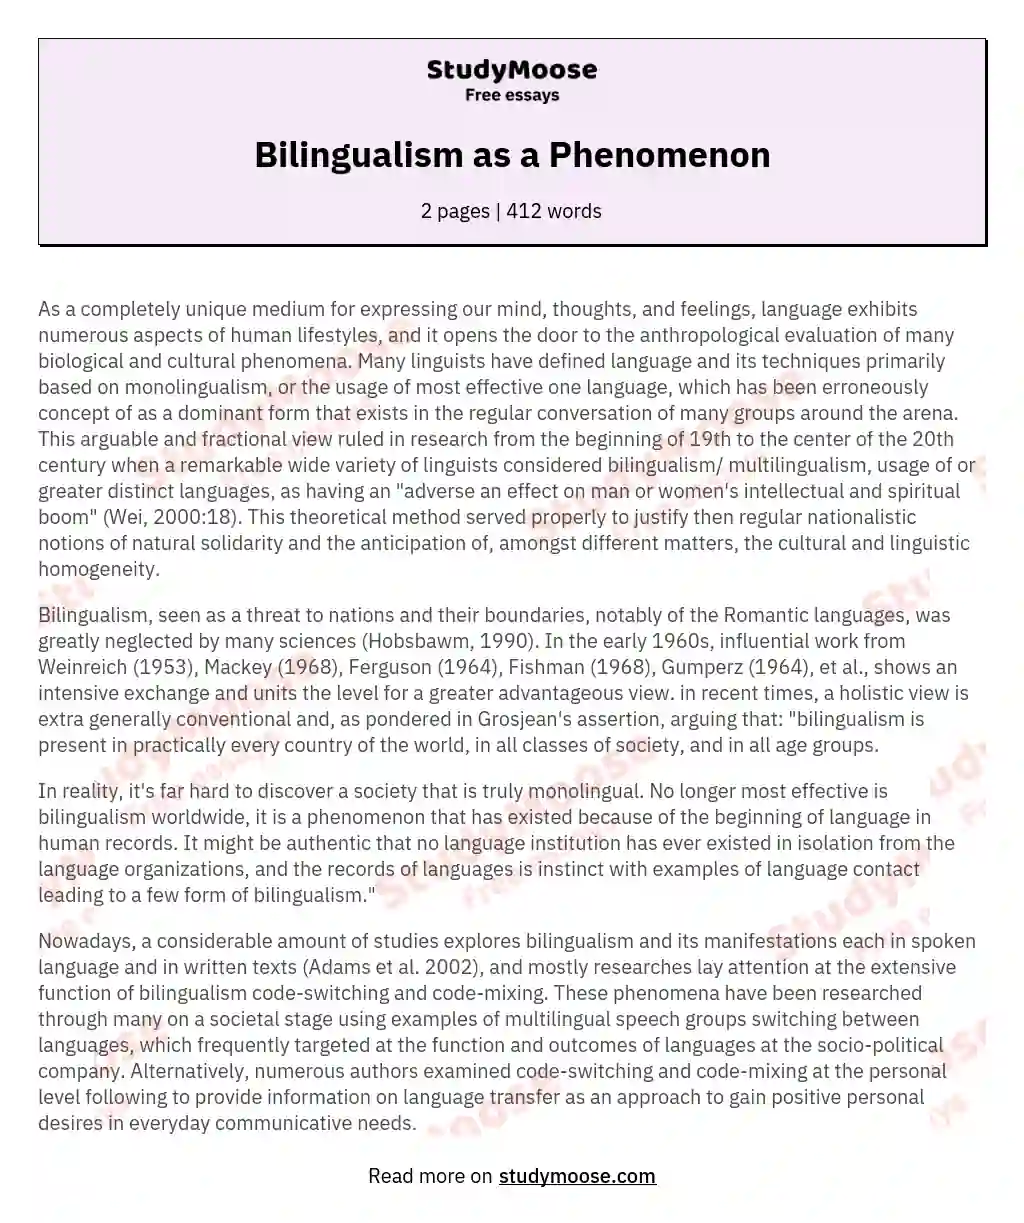 Bilingualism as a Phenomenon essay